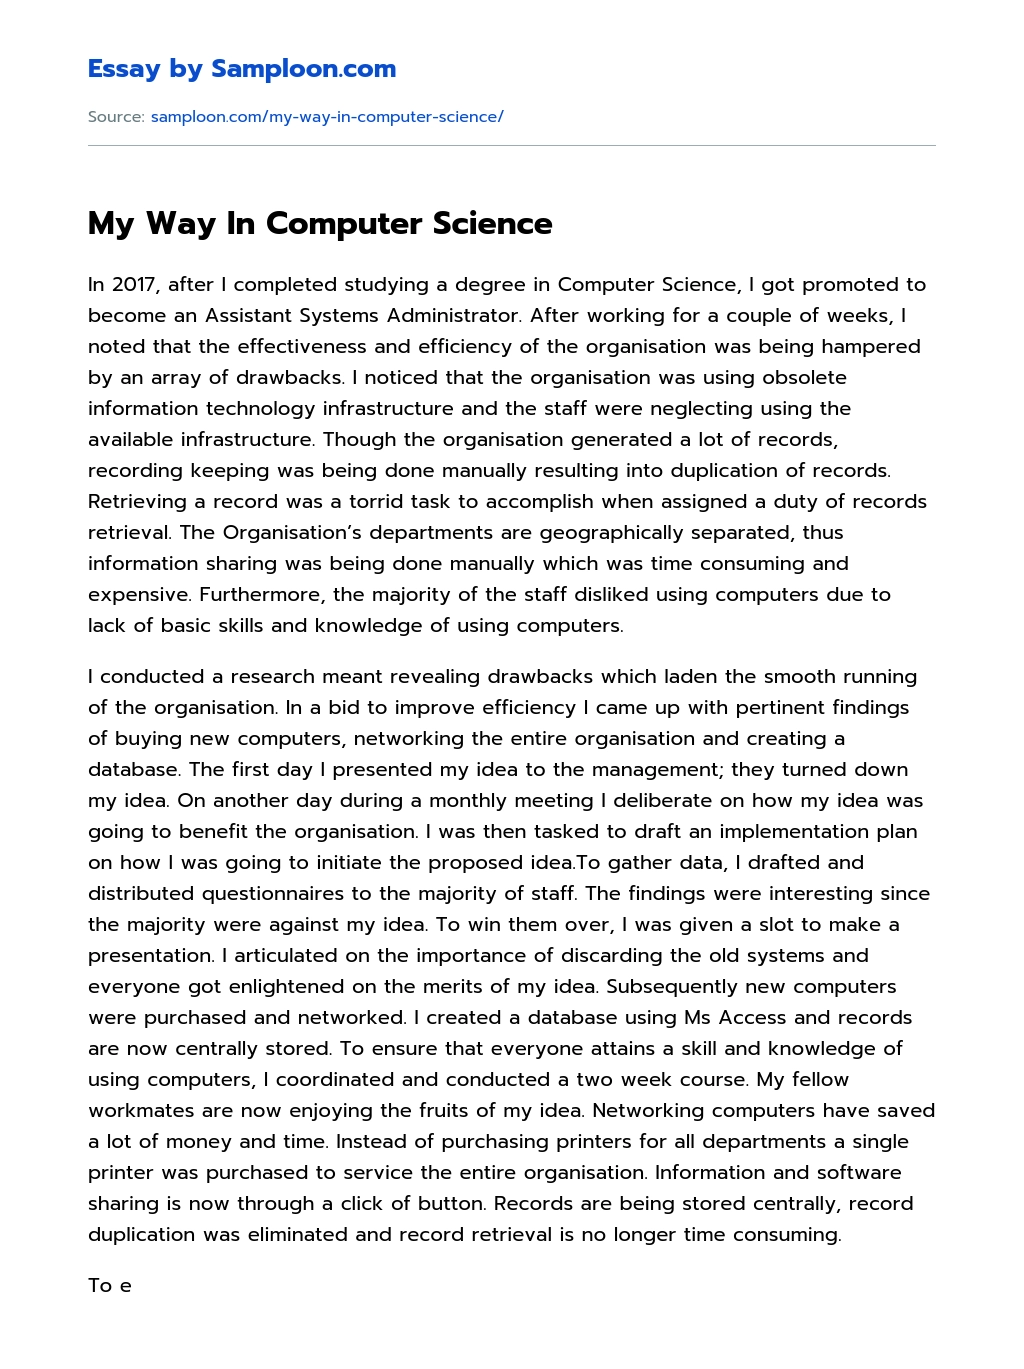 My Way In Computer Science Application essay